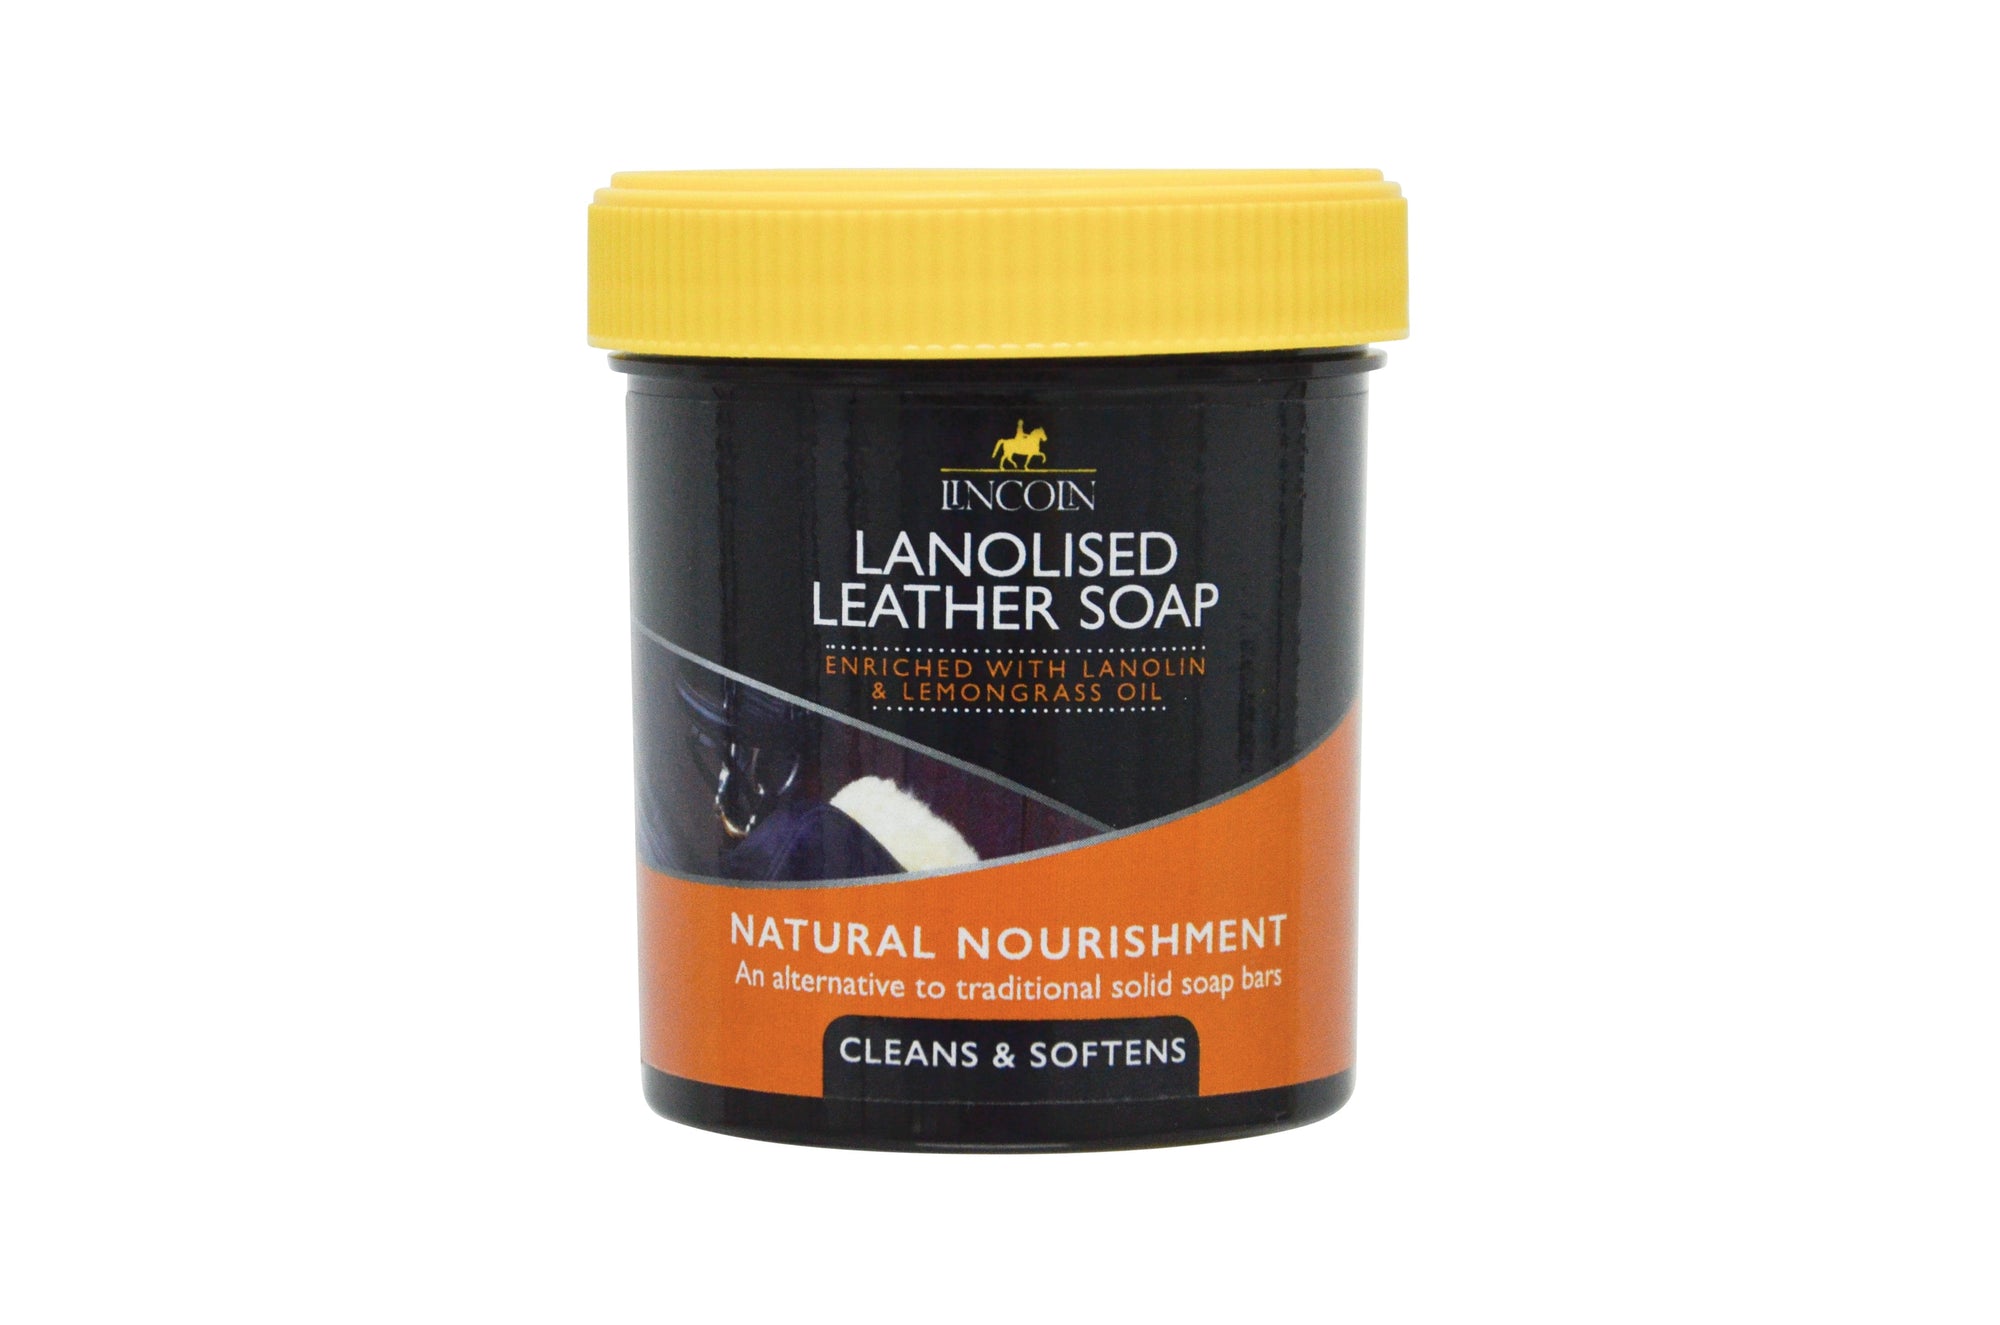 Lincoln lanolised leather soap